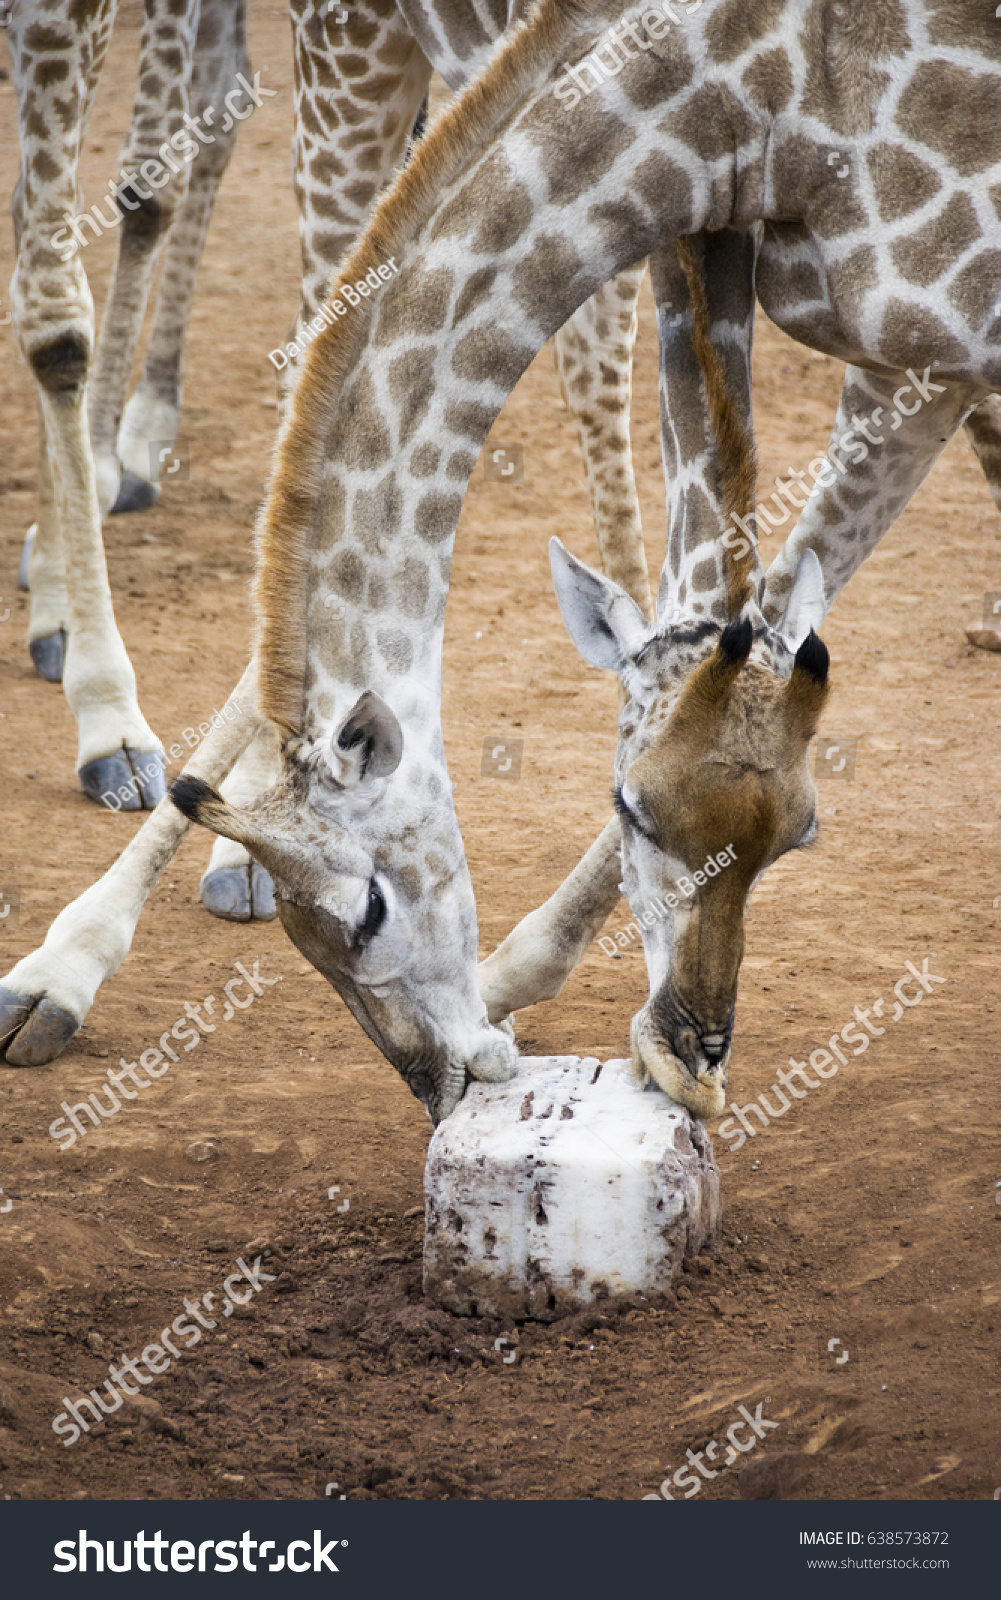 stock-photo-two-giraffes-share-a-salt-lick-pilanesberg-national-park-south-africa-638573872.jpg